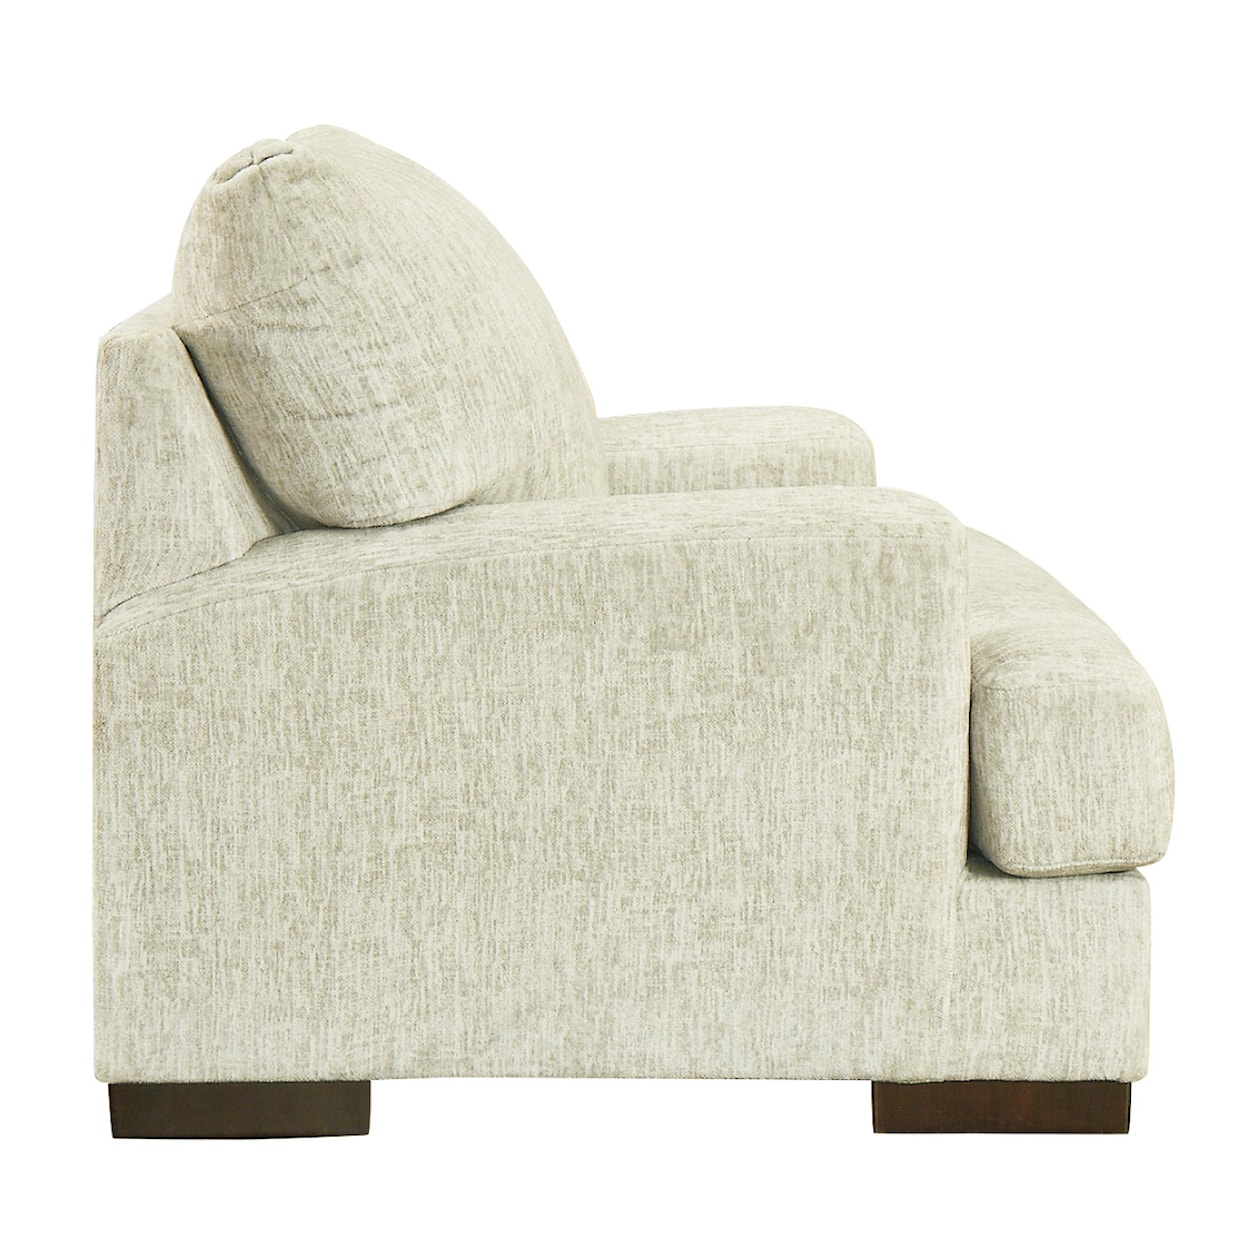 Ashley Furniture Signature Design Caretti Oversized Chair